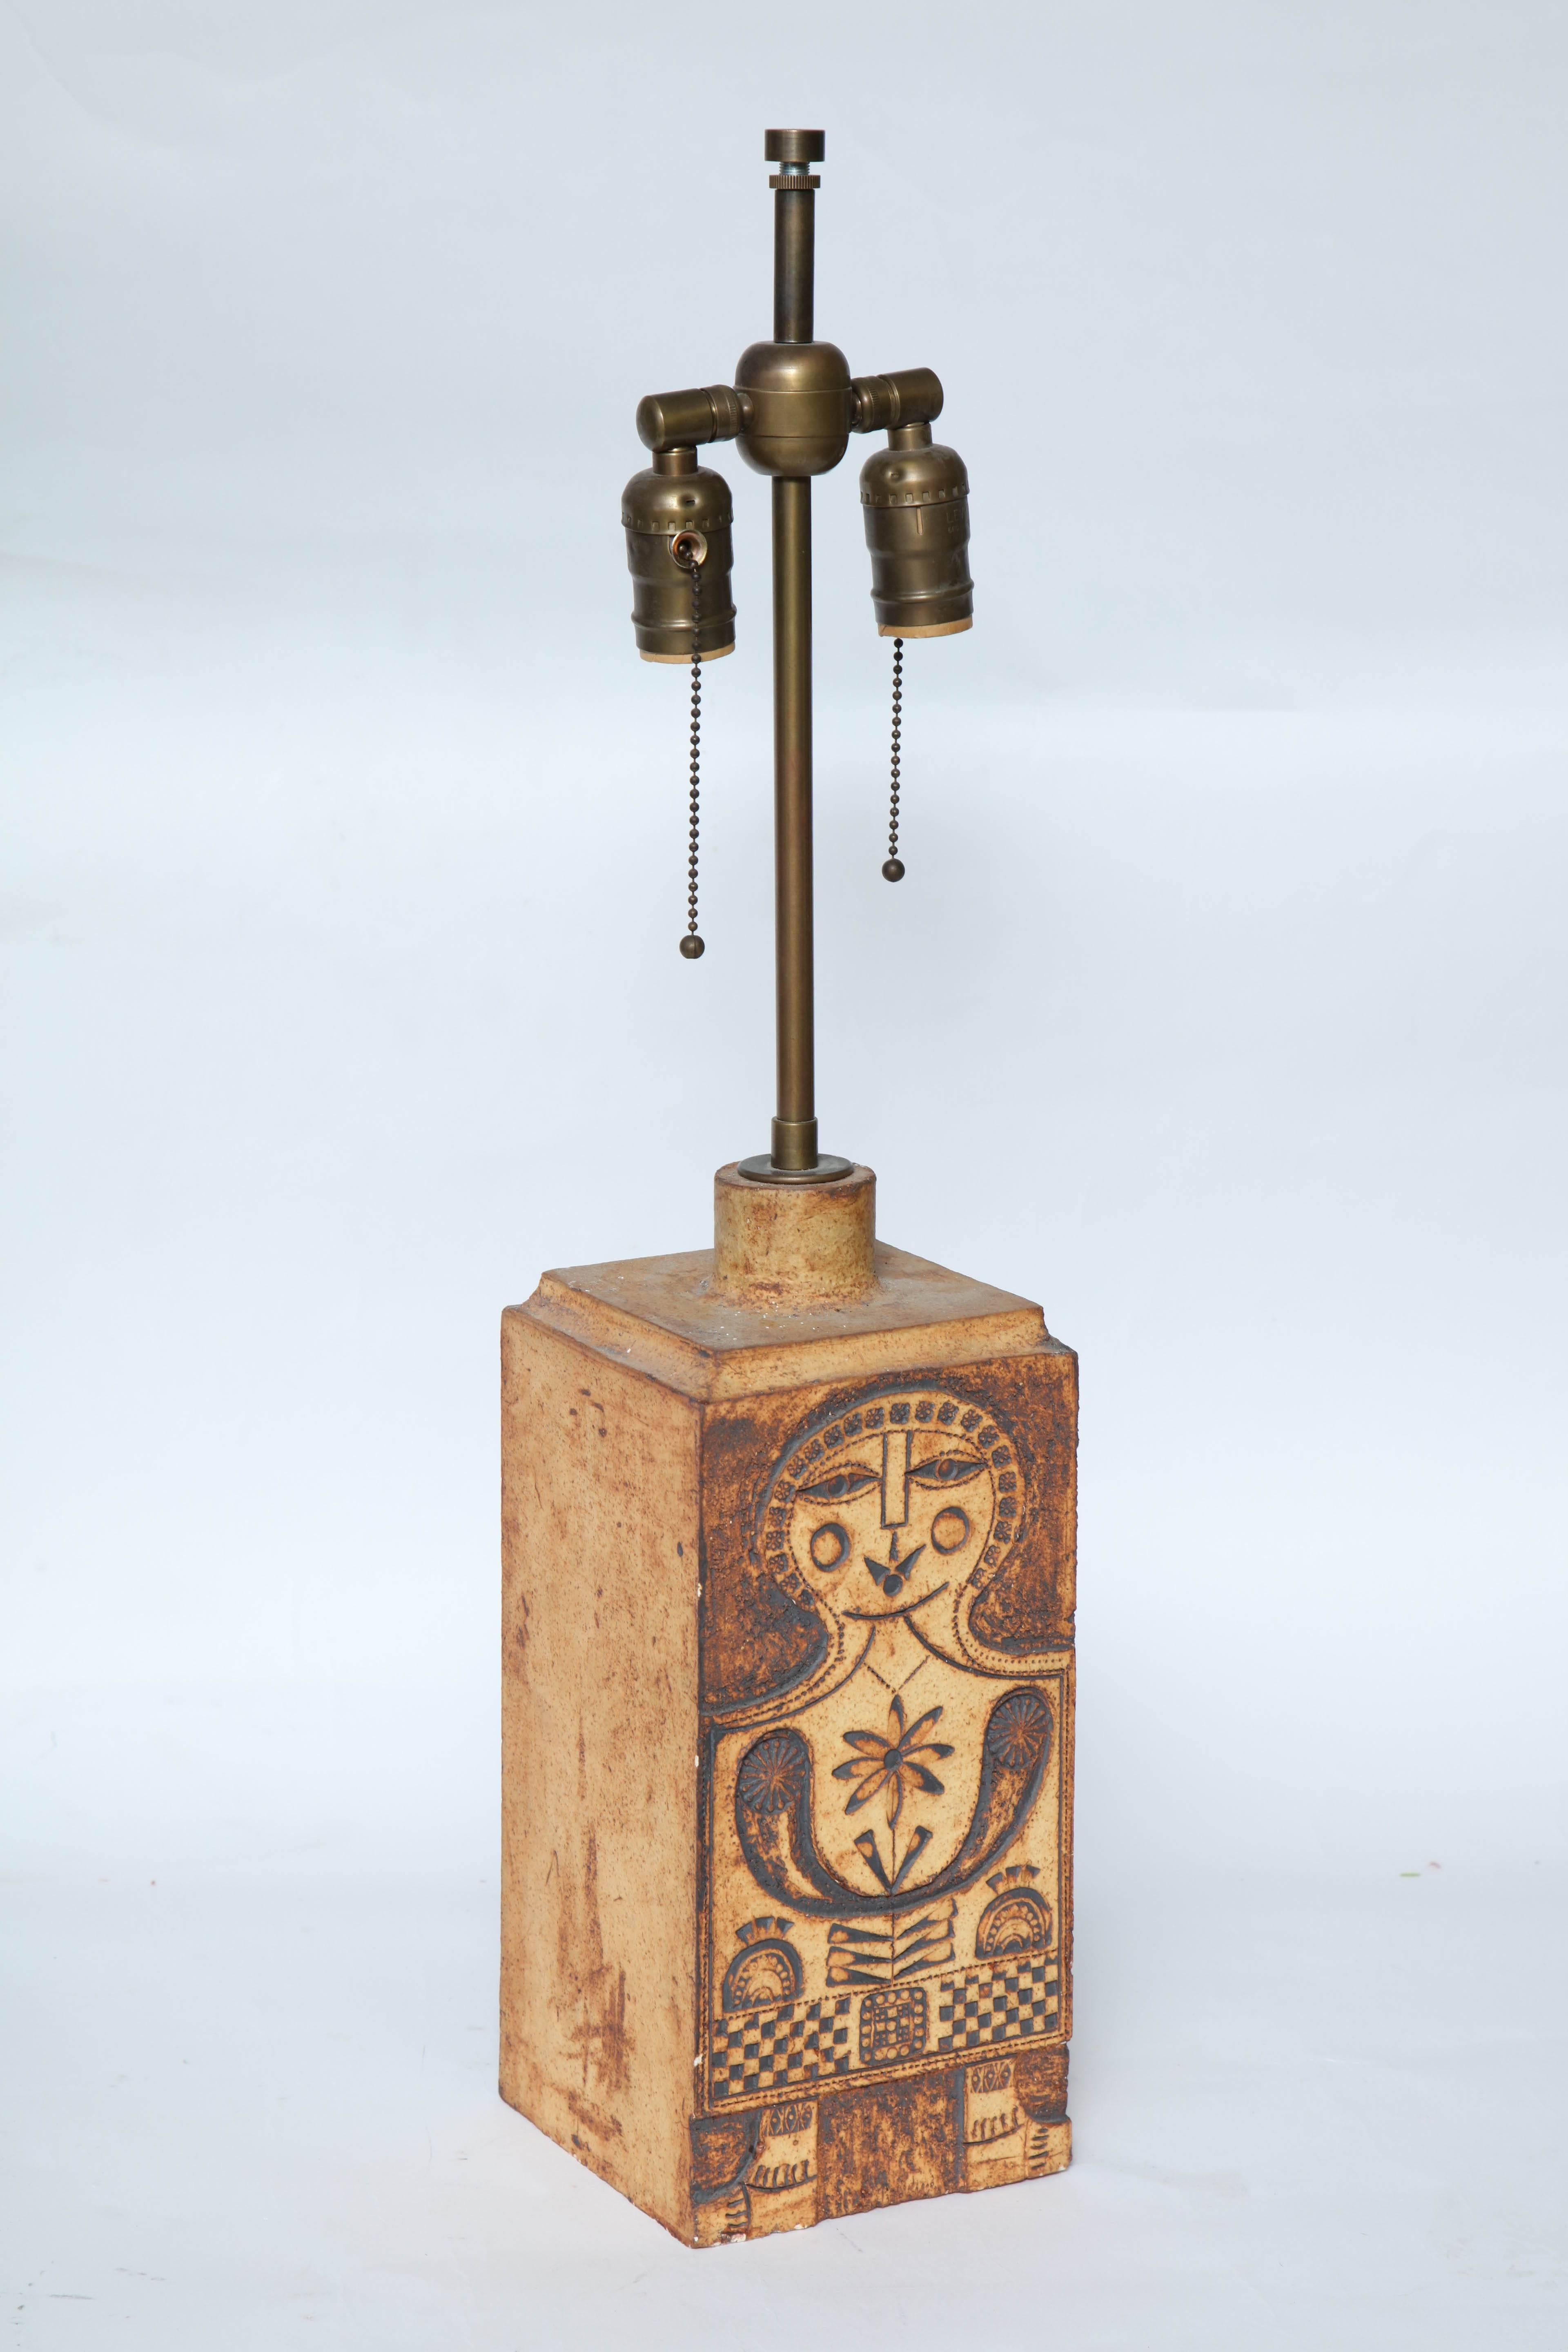 Etched Mid-Century Modern Ceramic Table Lamp Signed Capron Valauris, Paris France